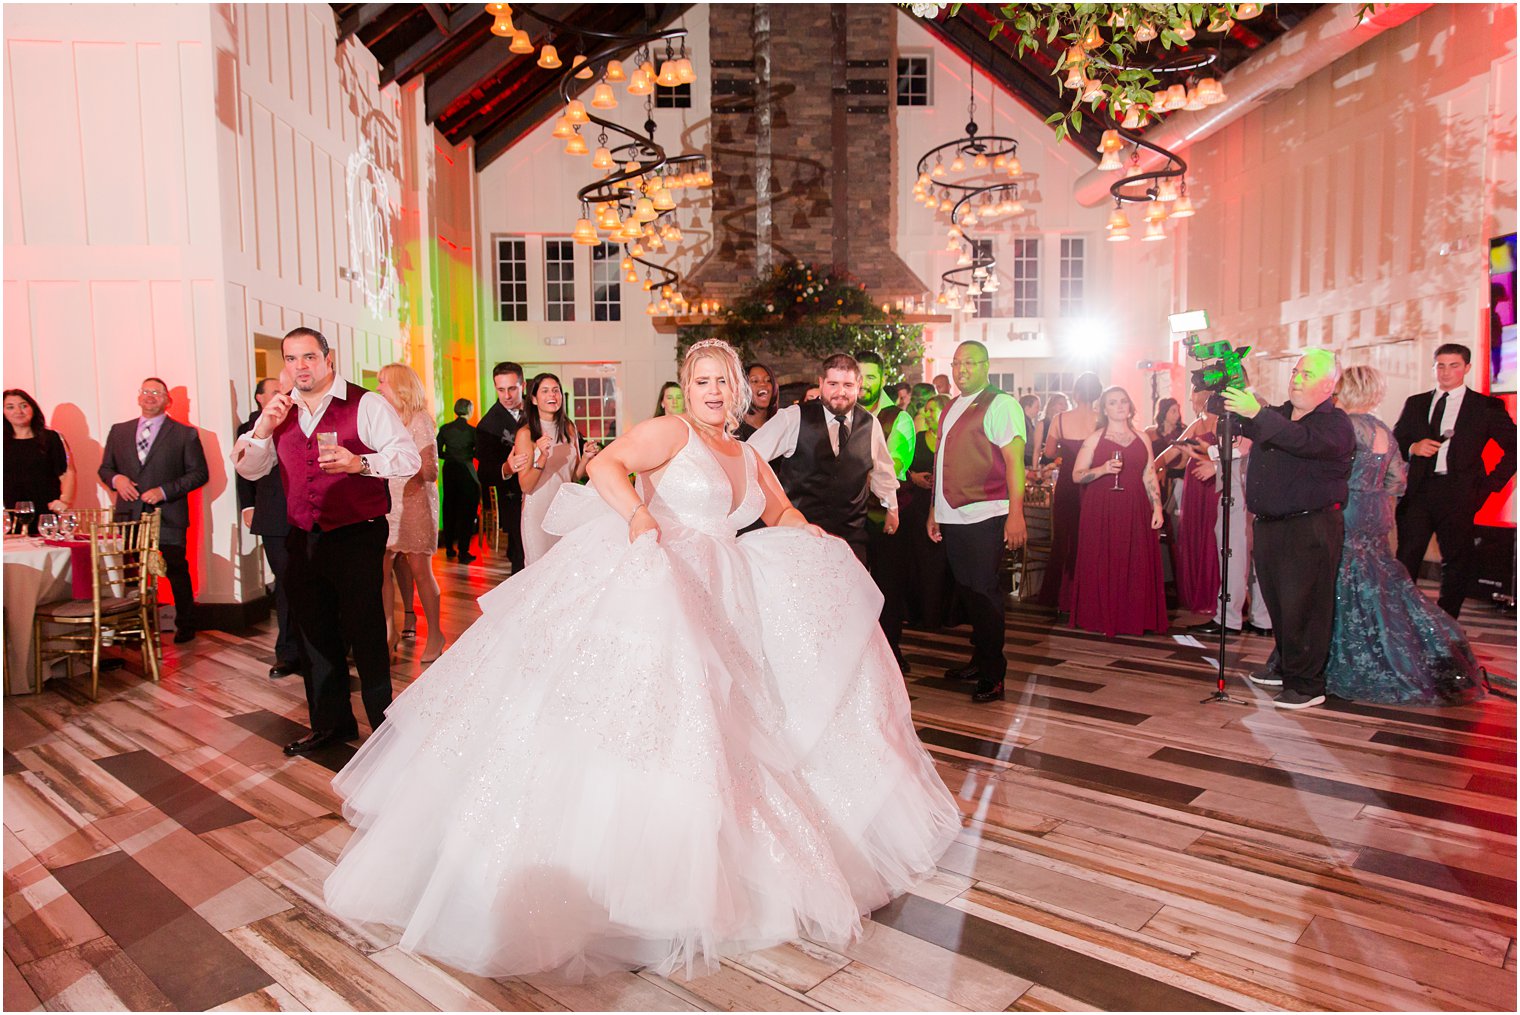 Ryland Inn wedding reception fun photographed by Idalia Photography